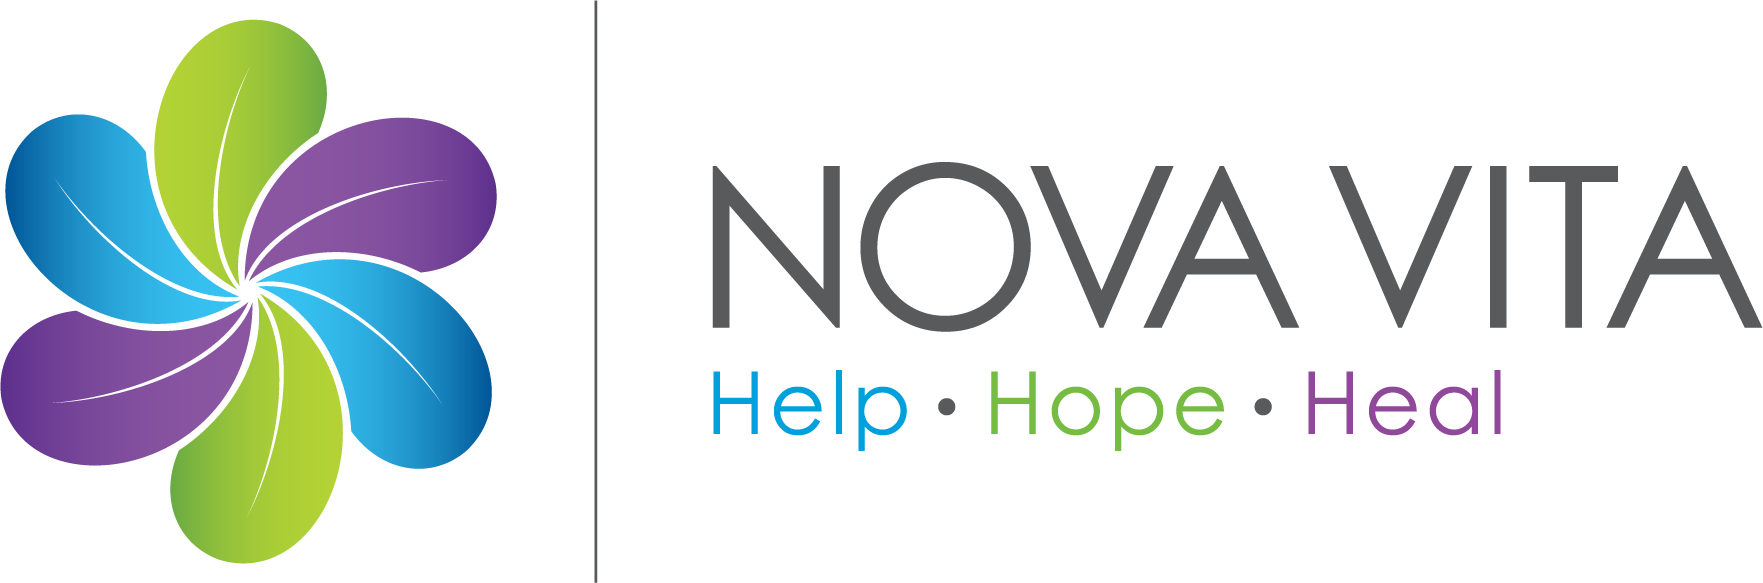 Nova Vita Domestic Violence Prevention Services